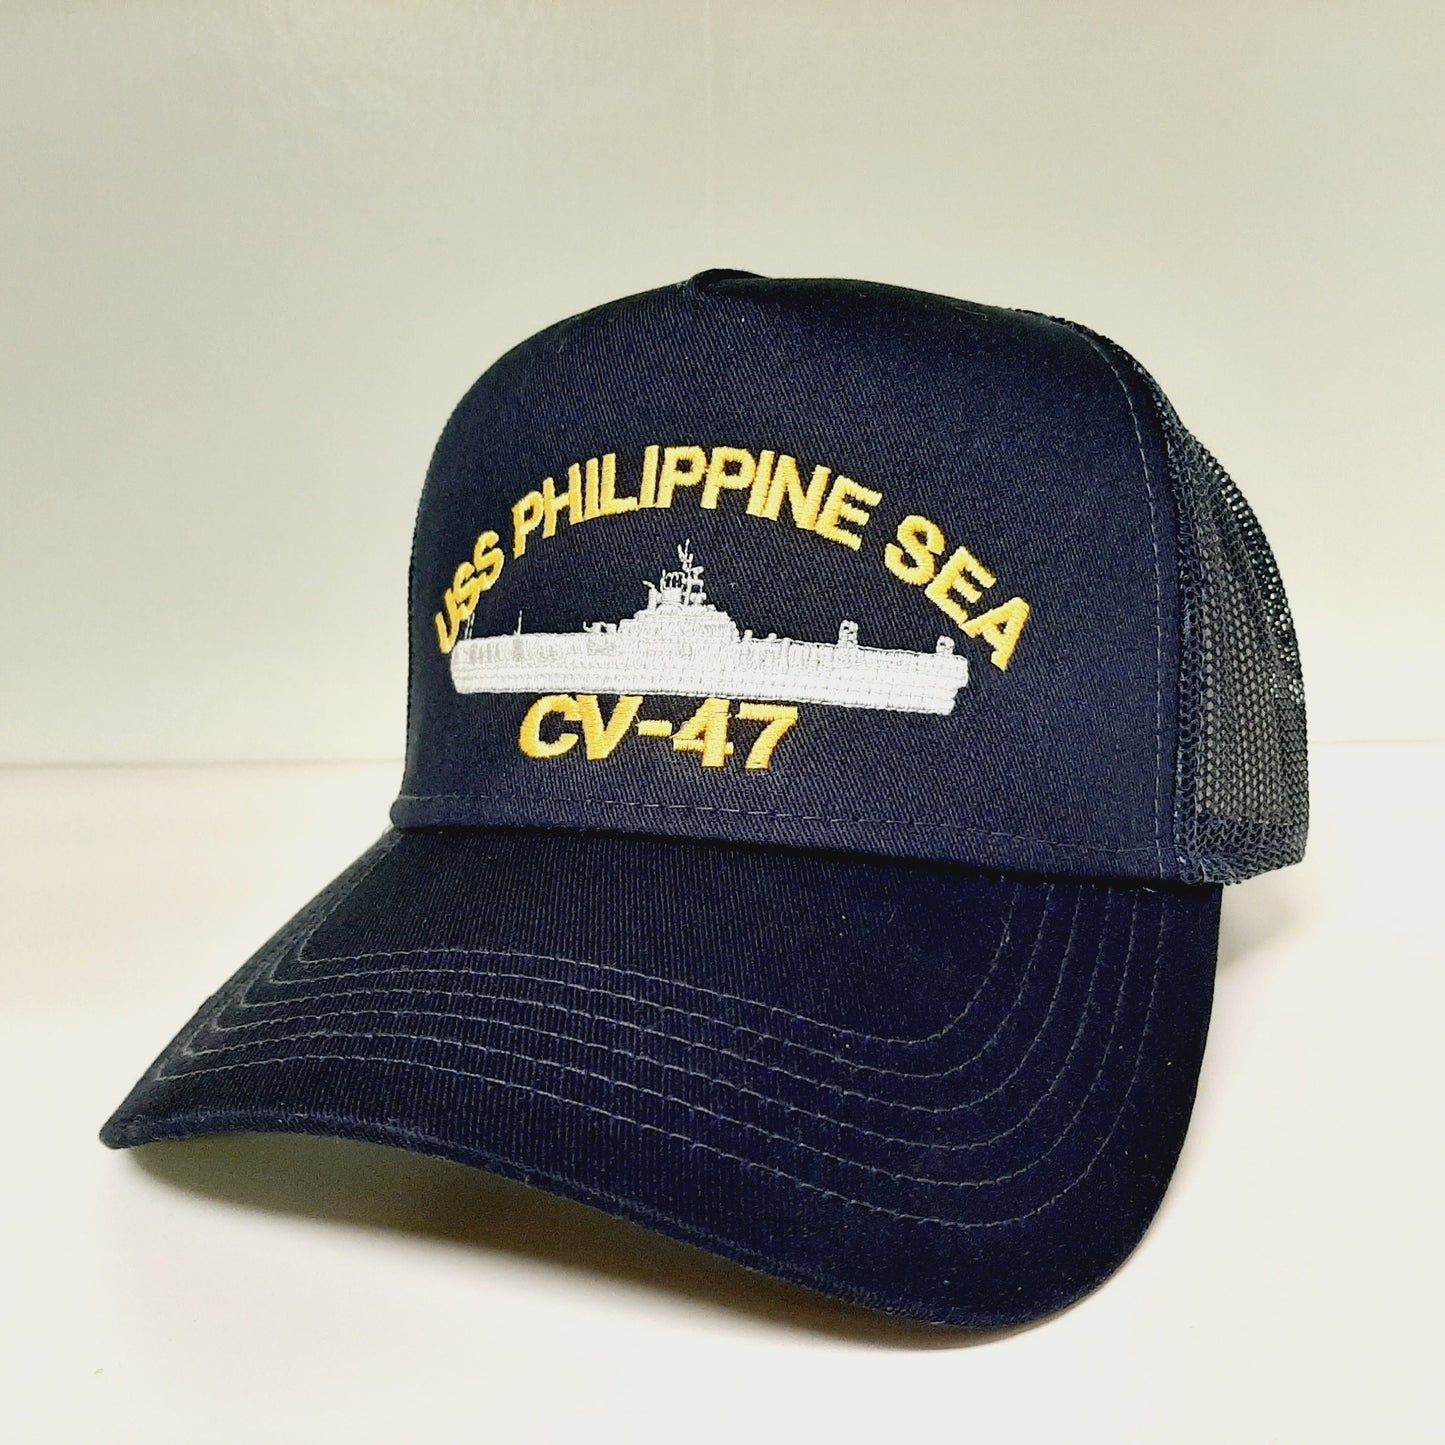 USS Philippine Sea CV-47 Navy Ship Baseball Cap Blue Mesh Snapback 3.5 inch Profile Cotton Front Panel